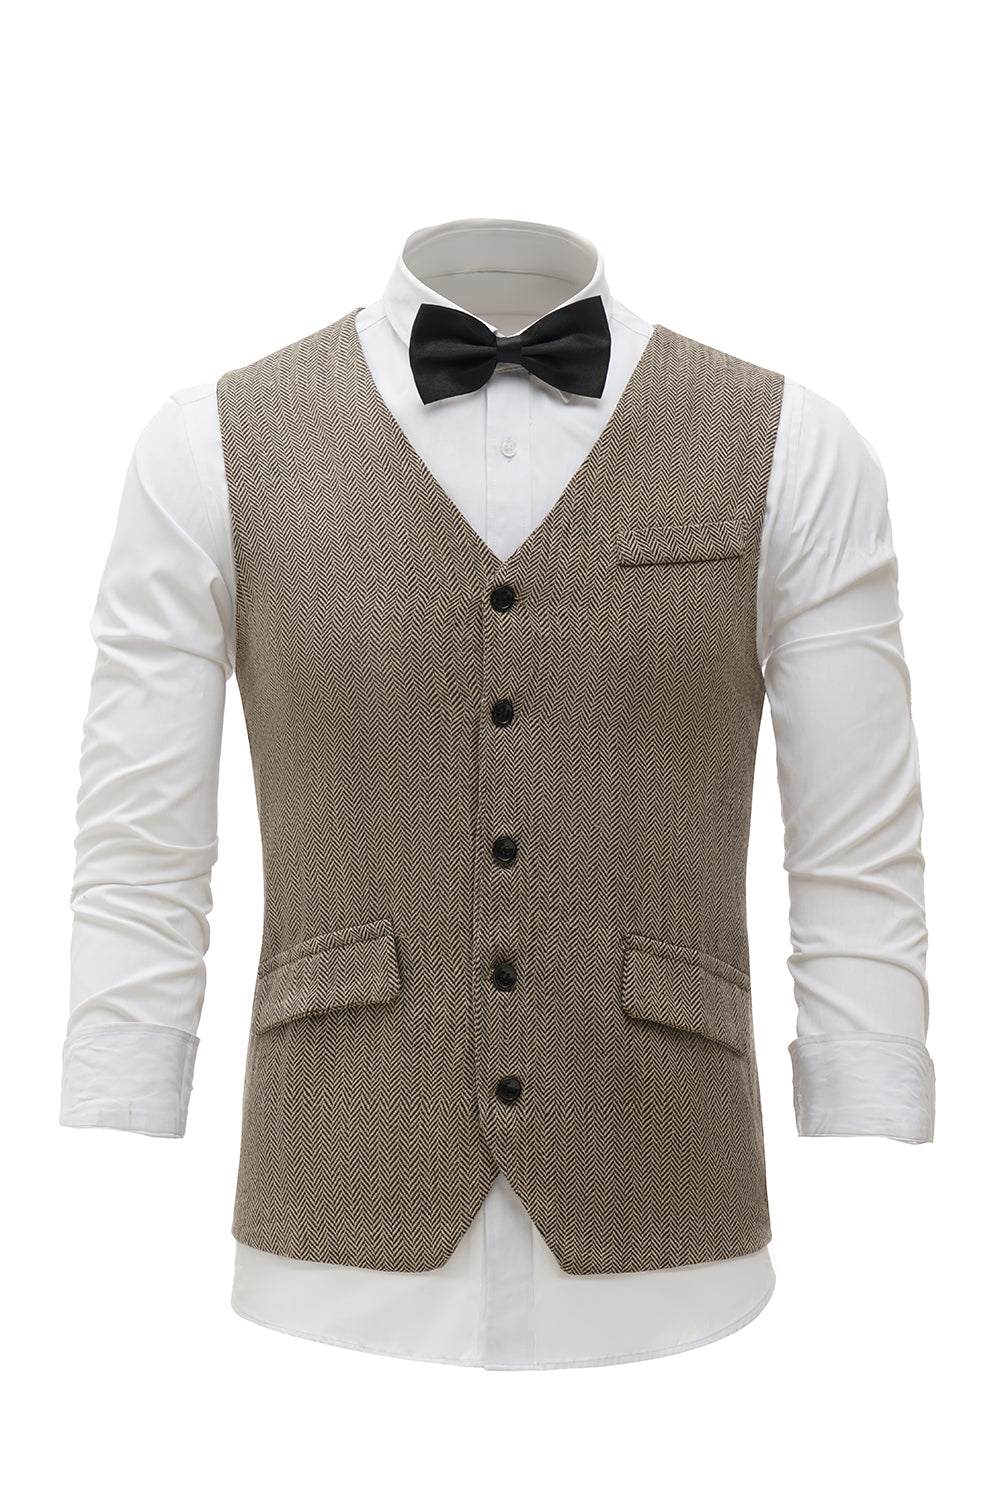 Khaki Solid Single Breasted Shawl Lapel Men's Suit Vest